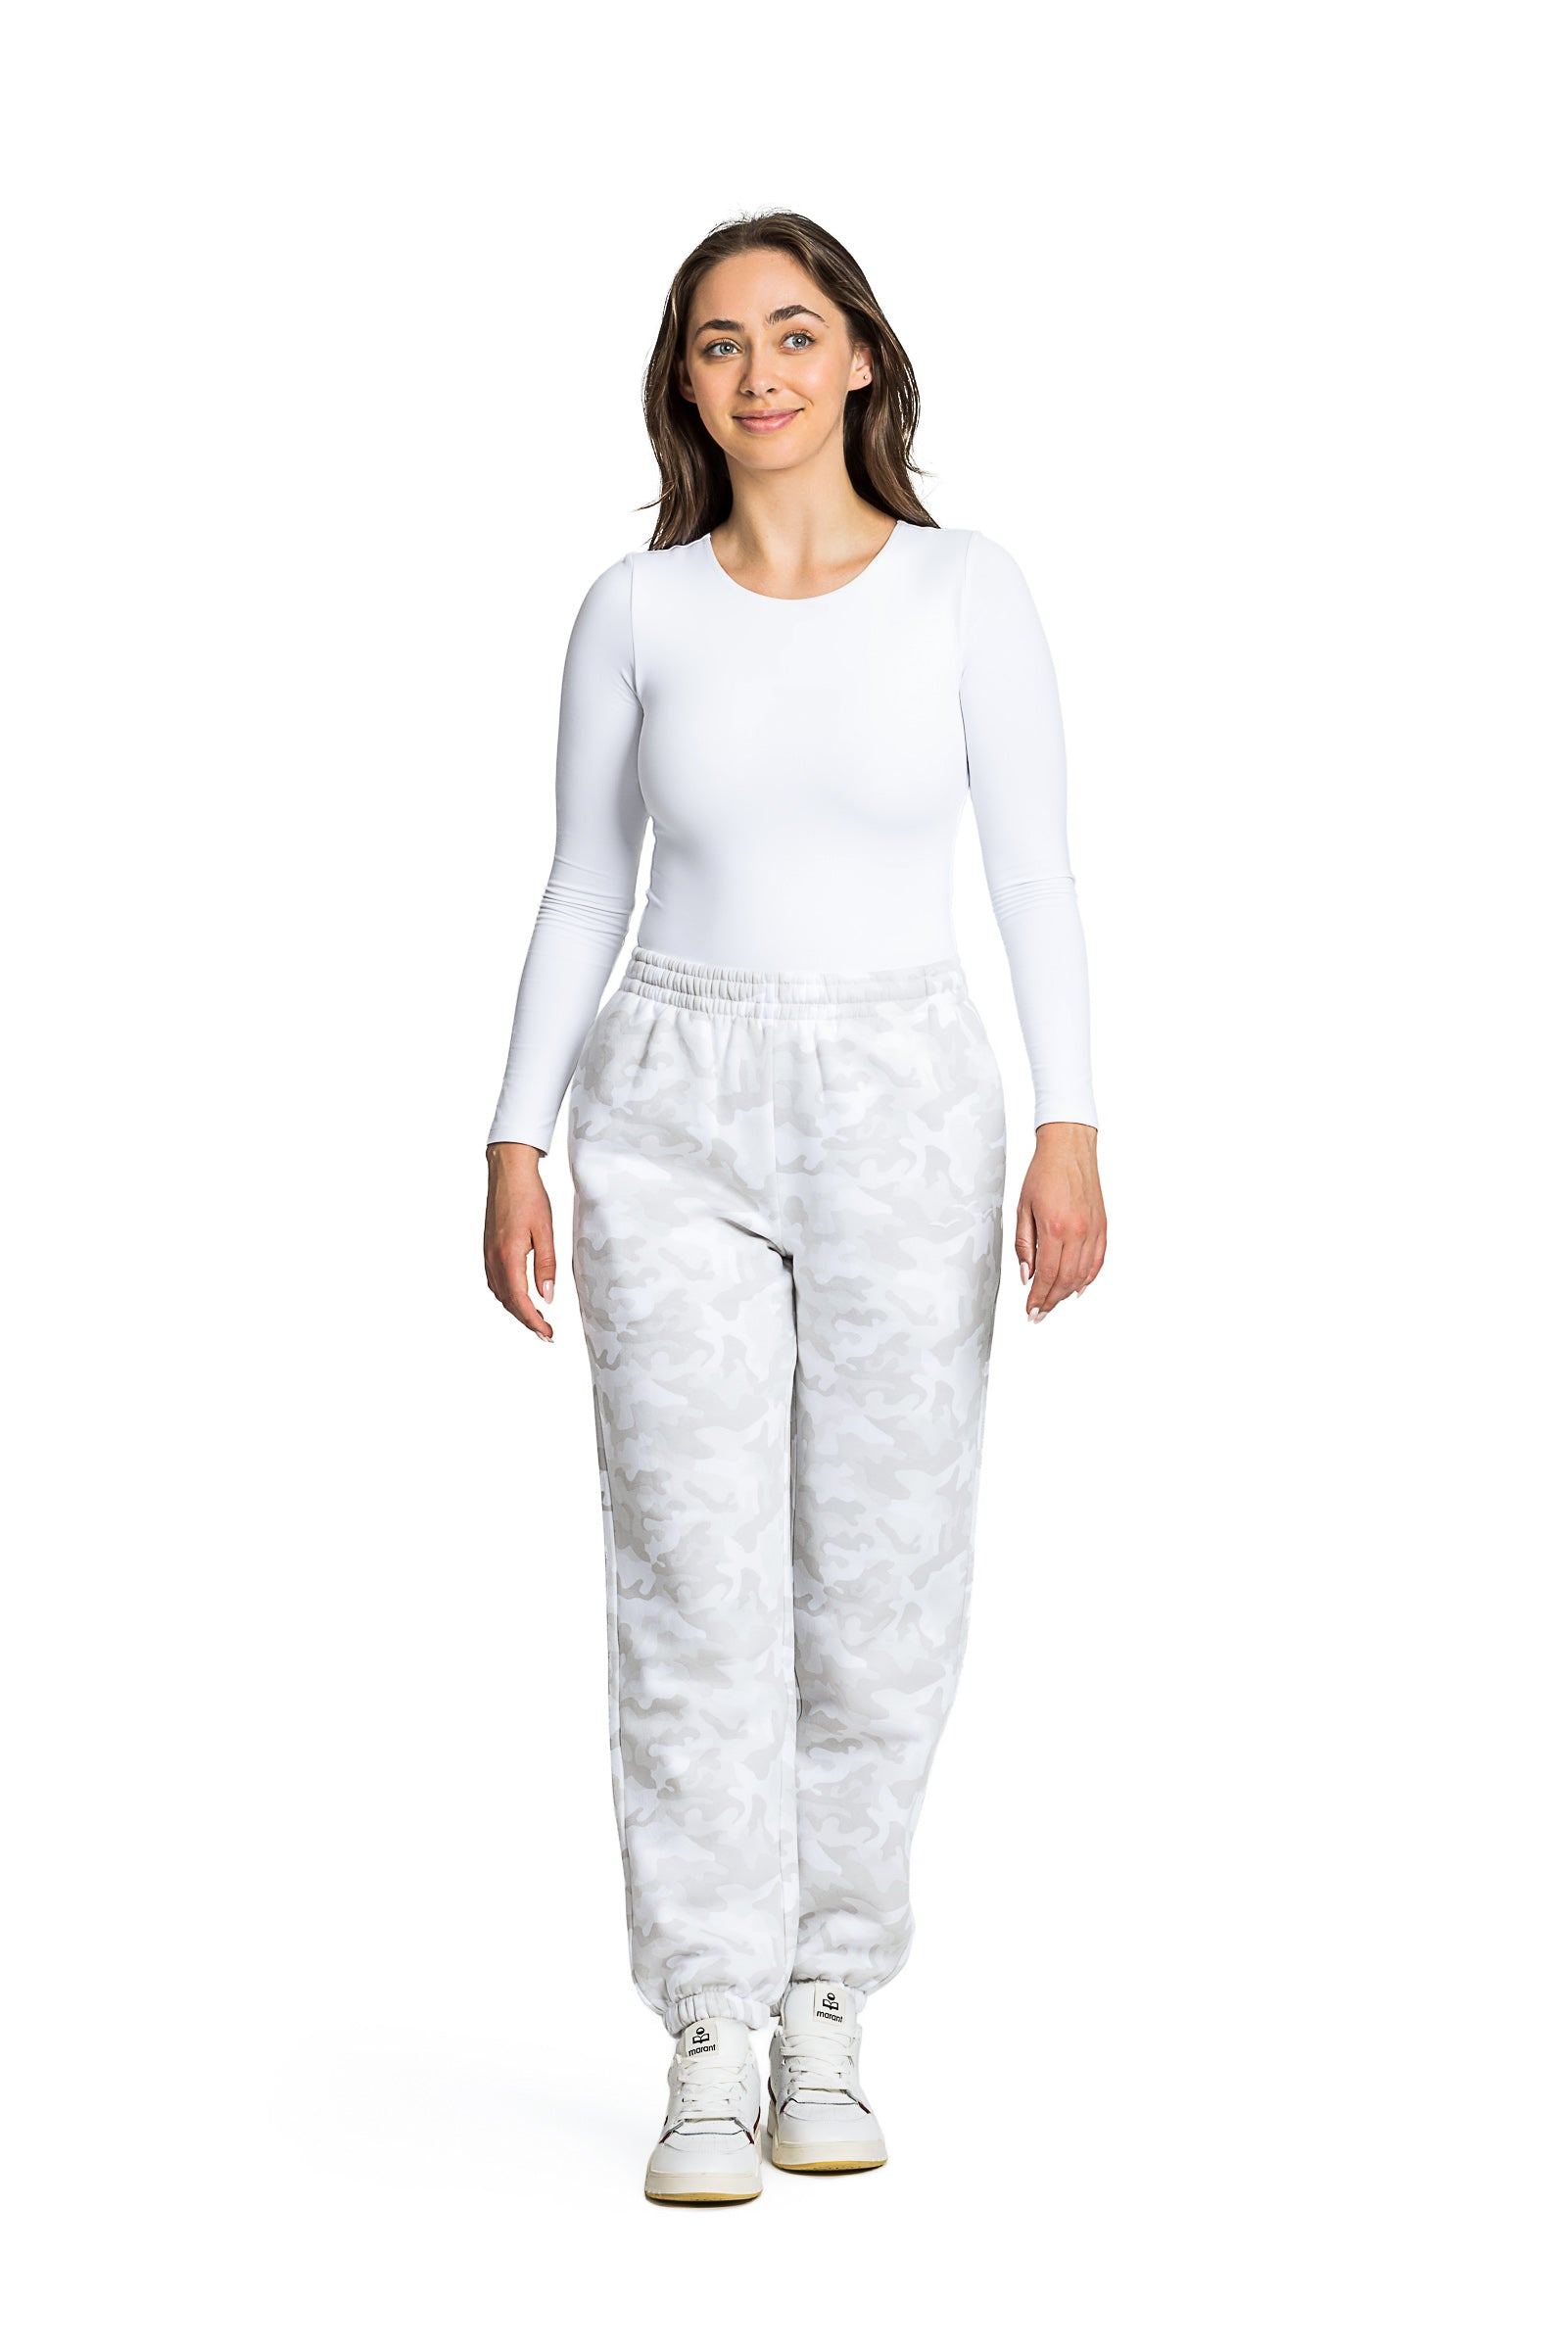 Nova premium fleece relaxed sweatpants in Winter White Camo